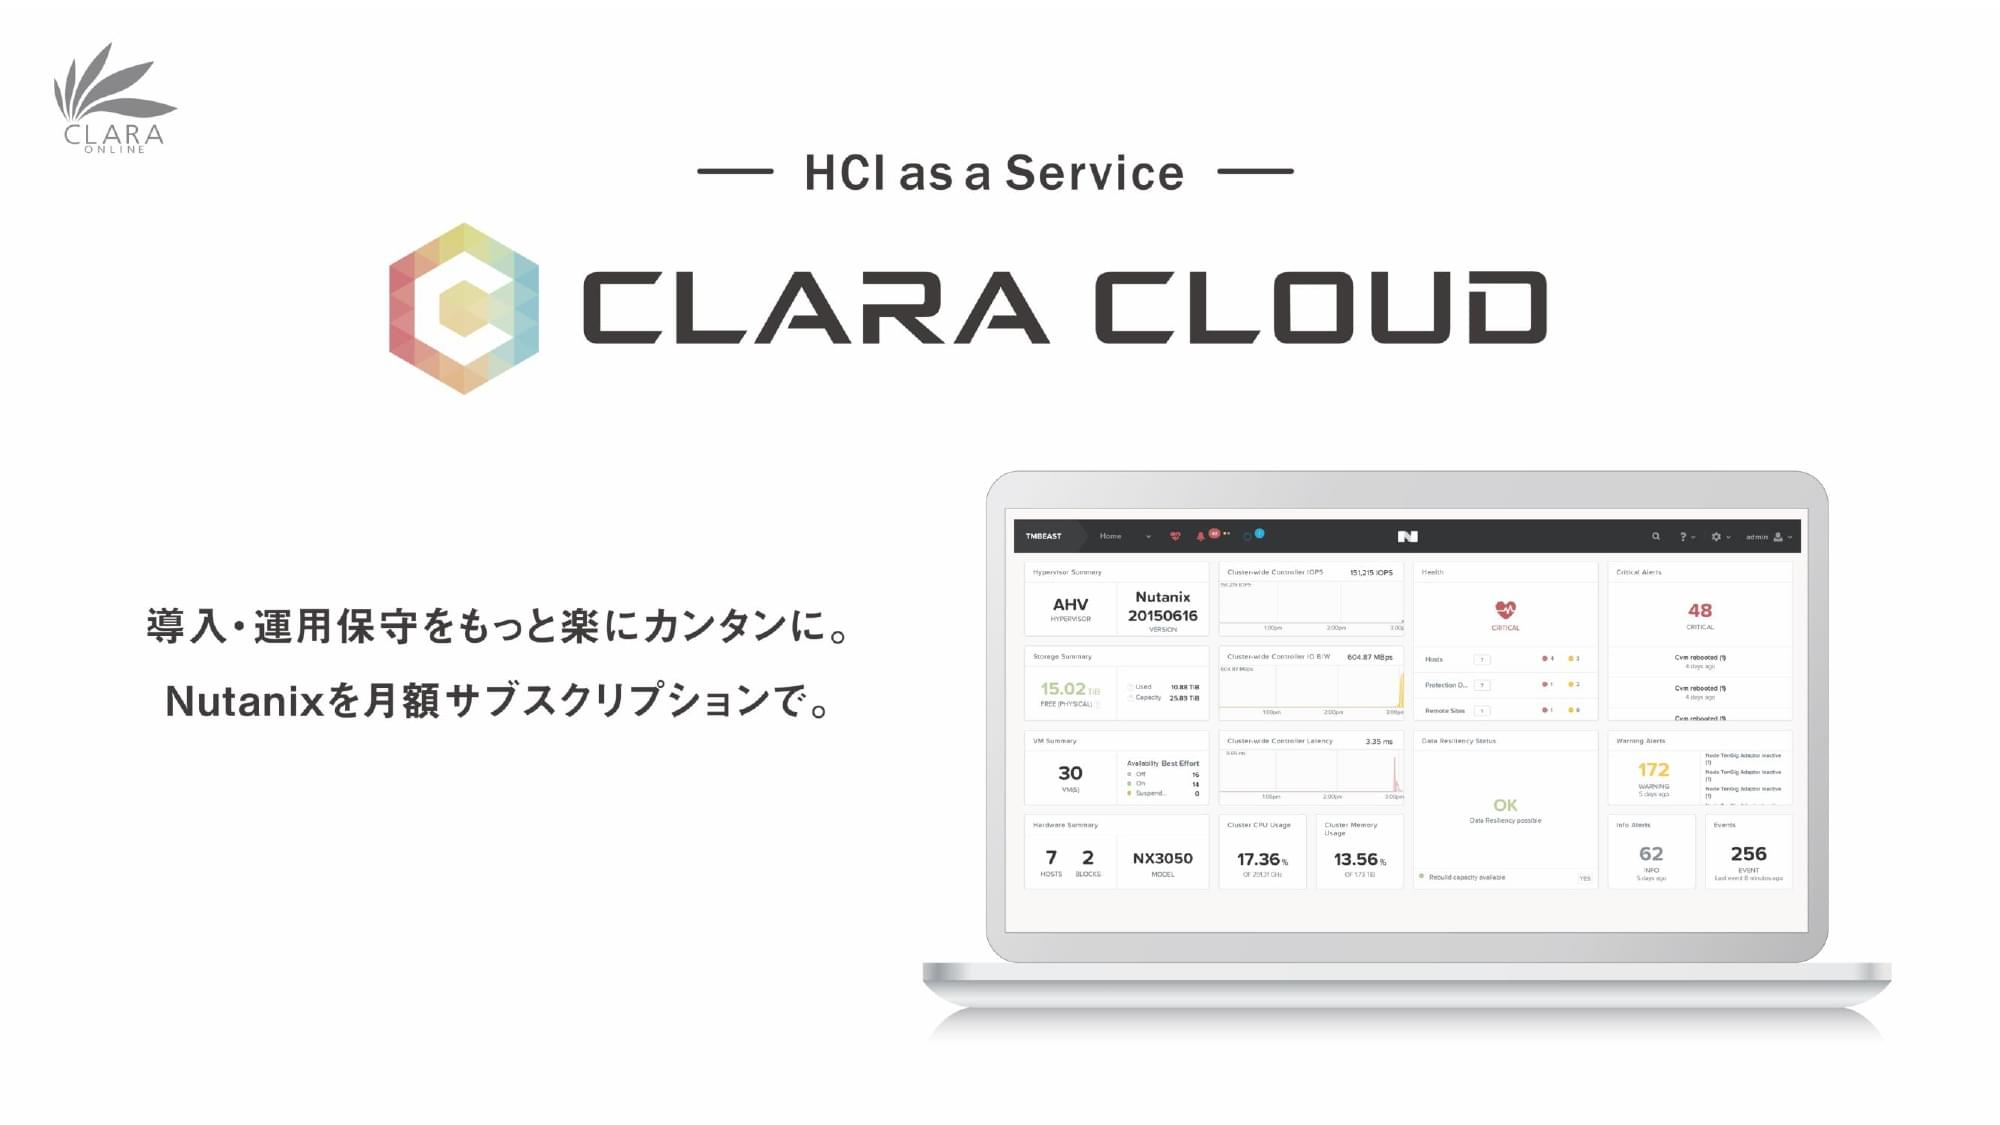 Clara Cloud